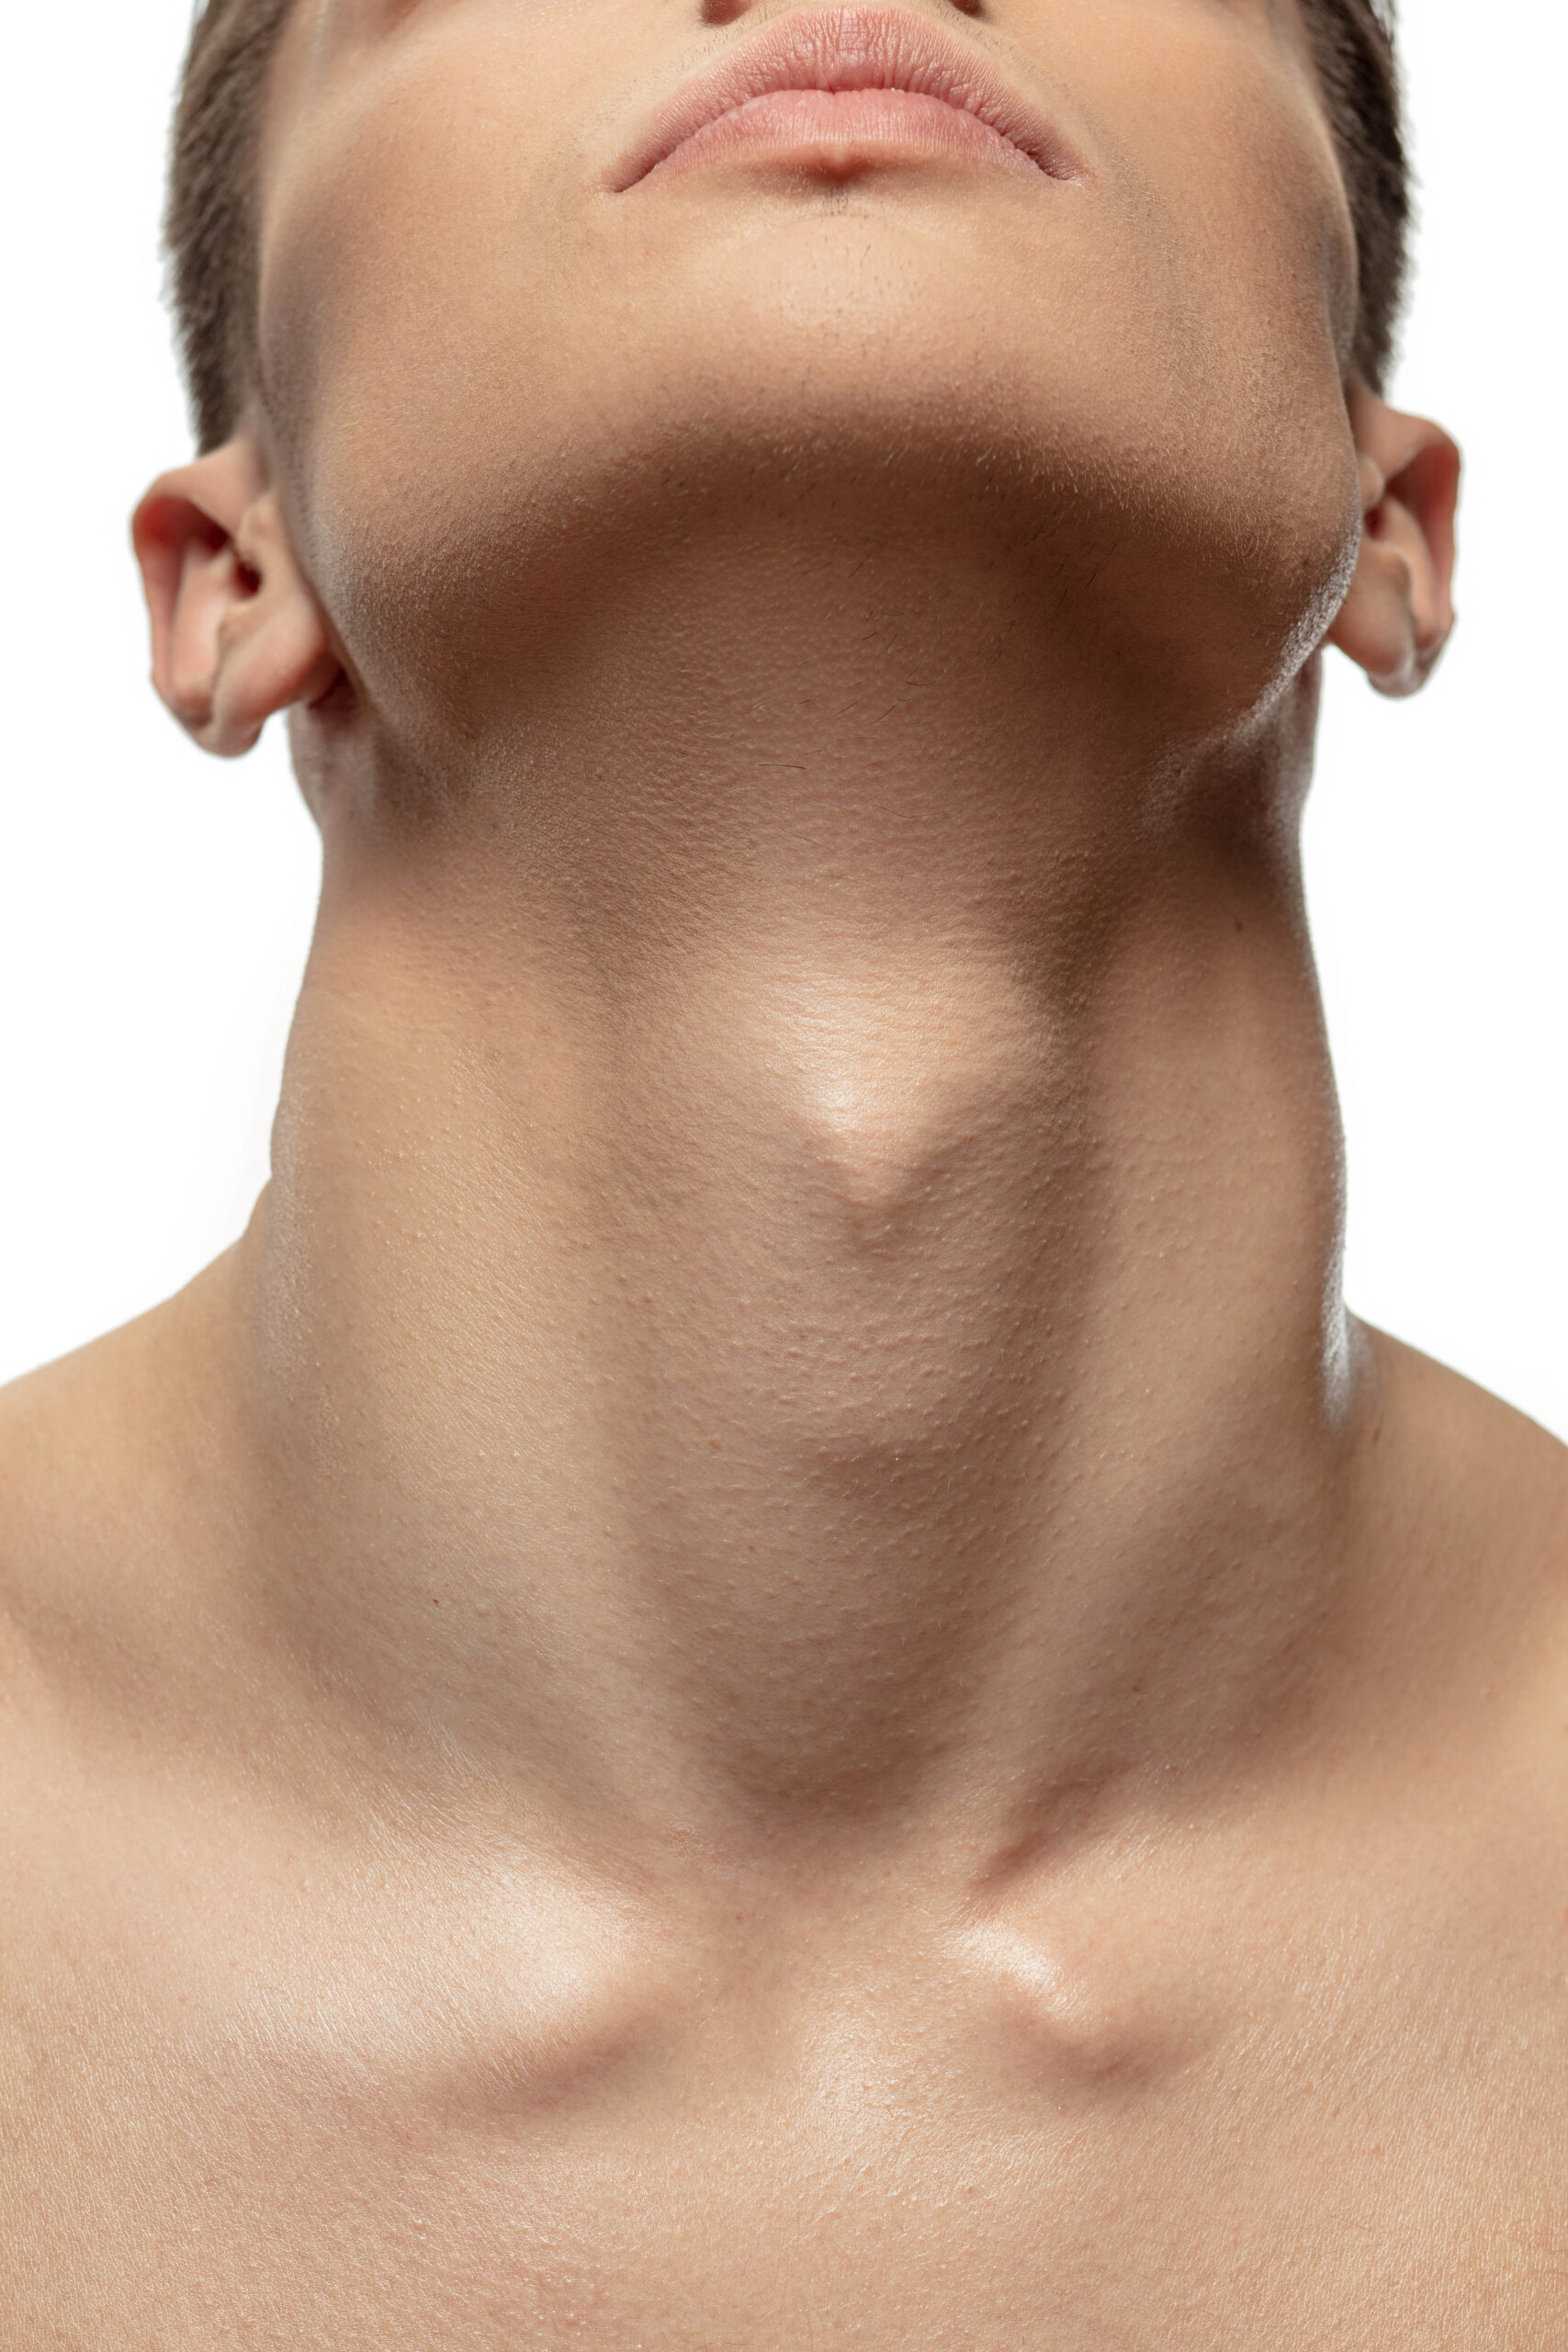 Male neck lift